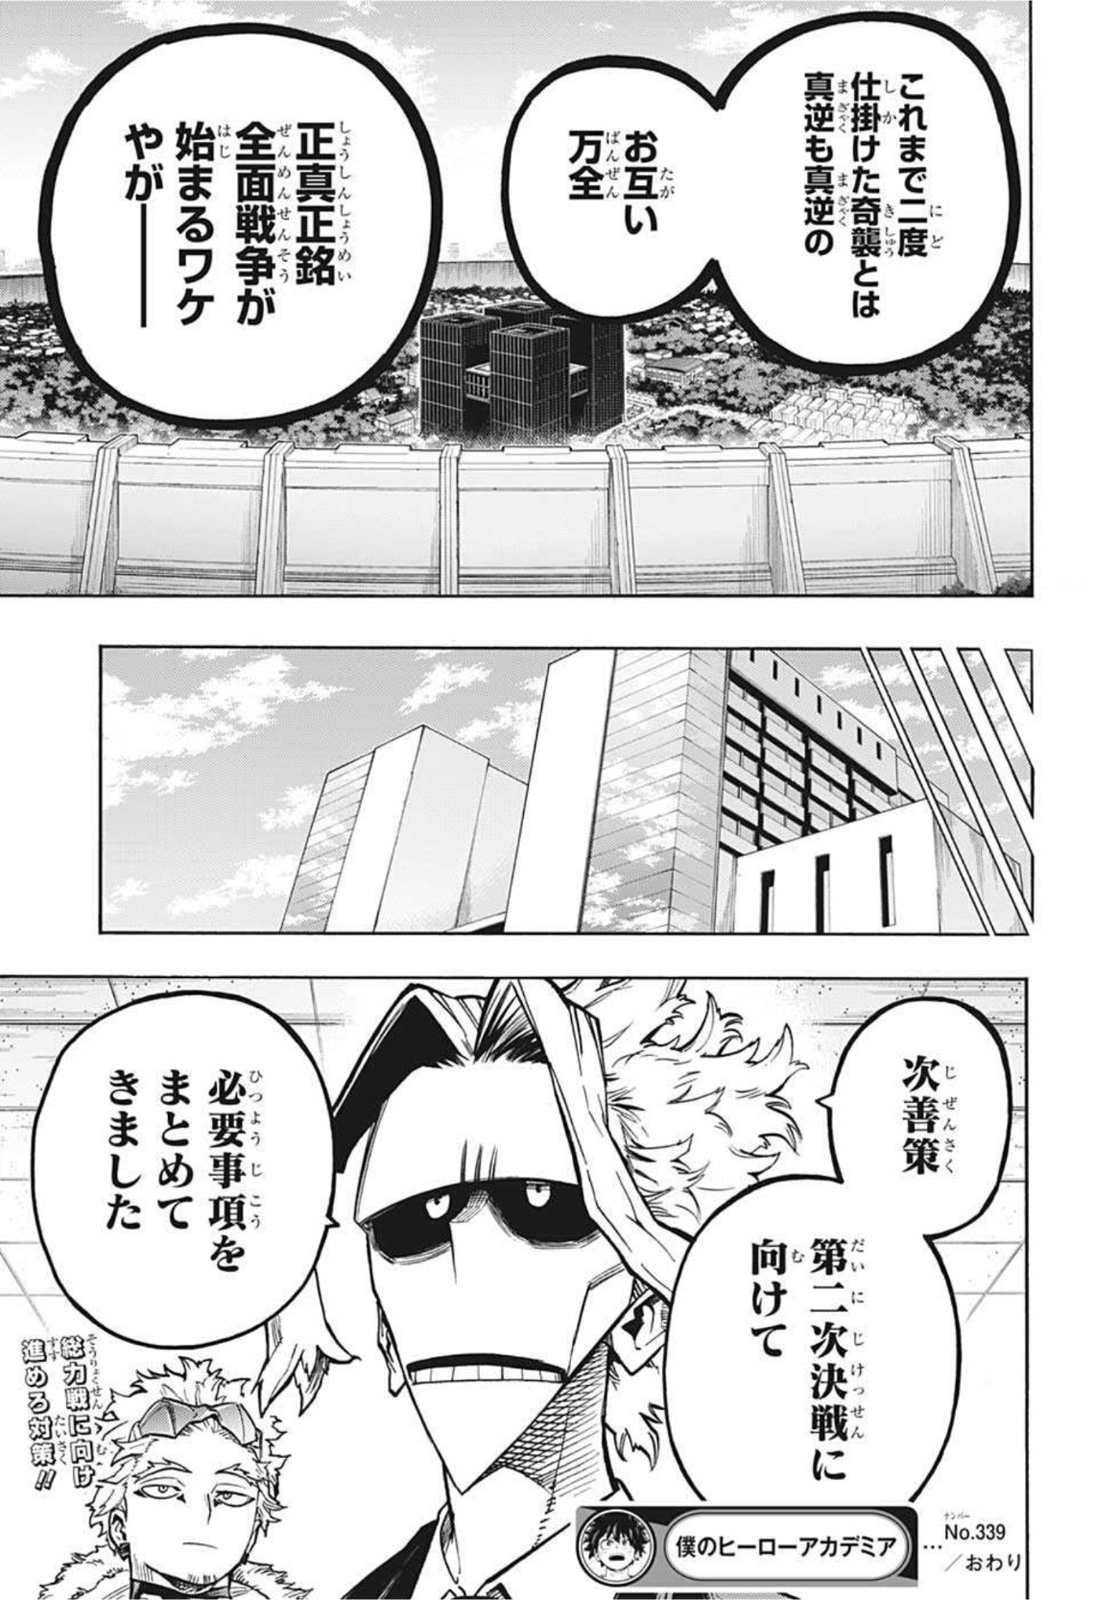 Boku no Hero Academia - Chapter 339 - Page 15